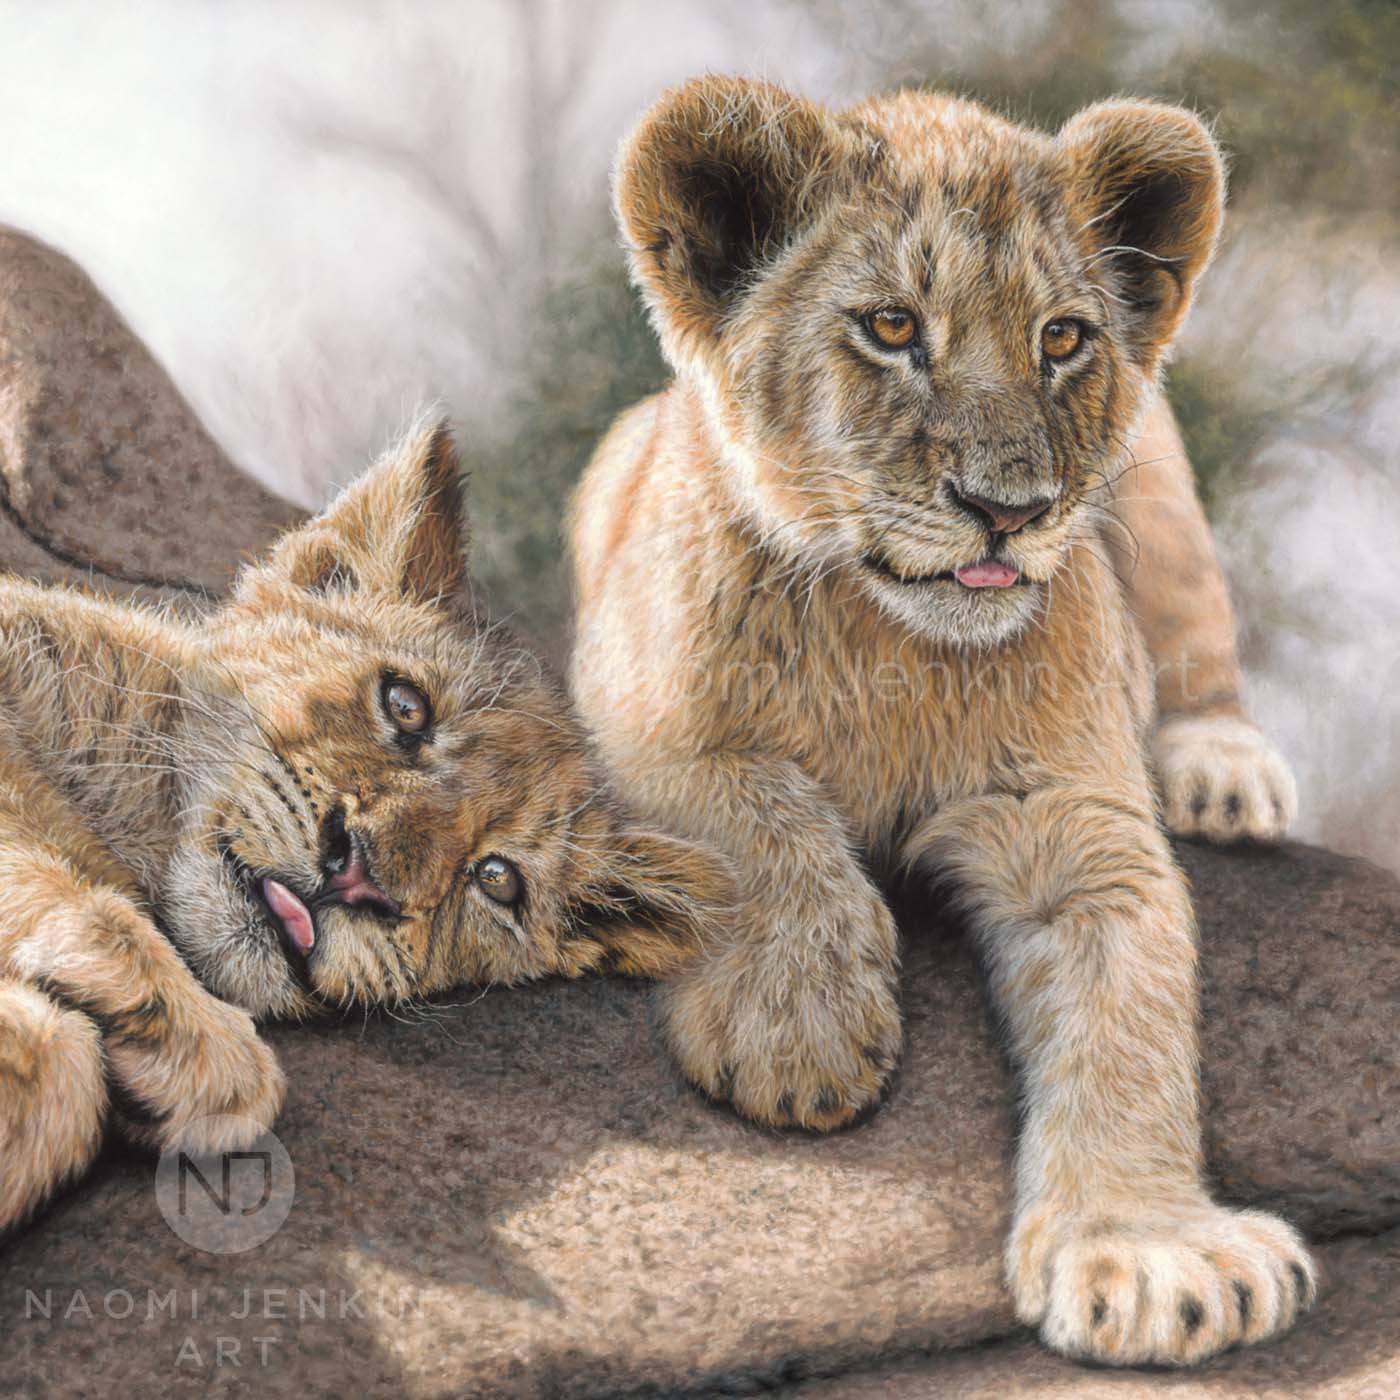 Lion art by wildlife artist Naomi Jenkin. 